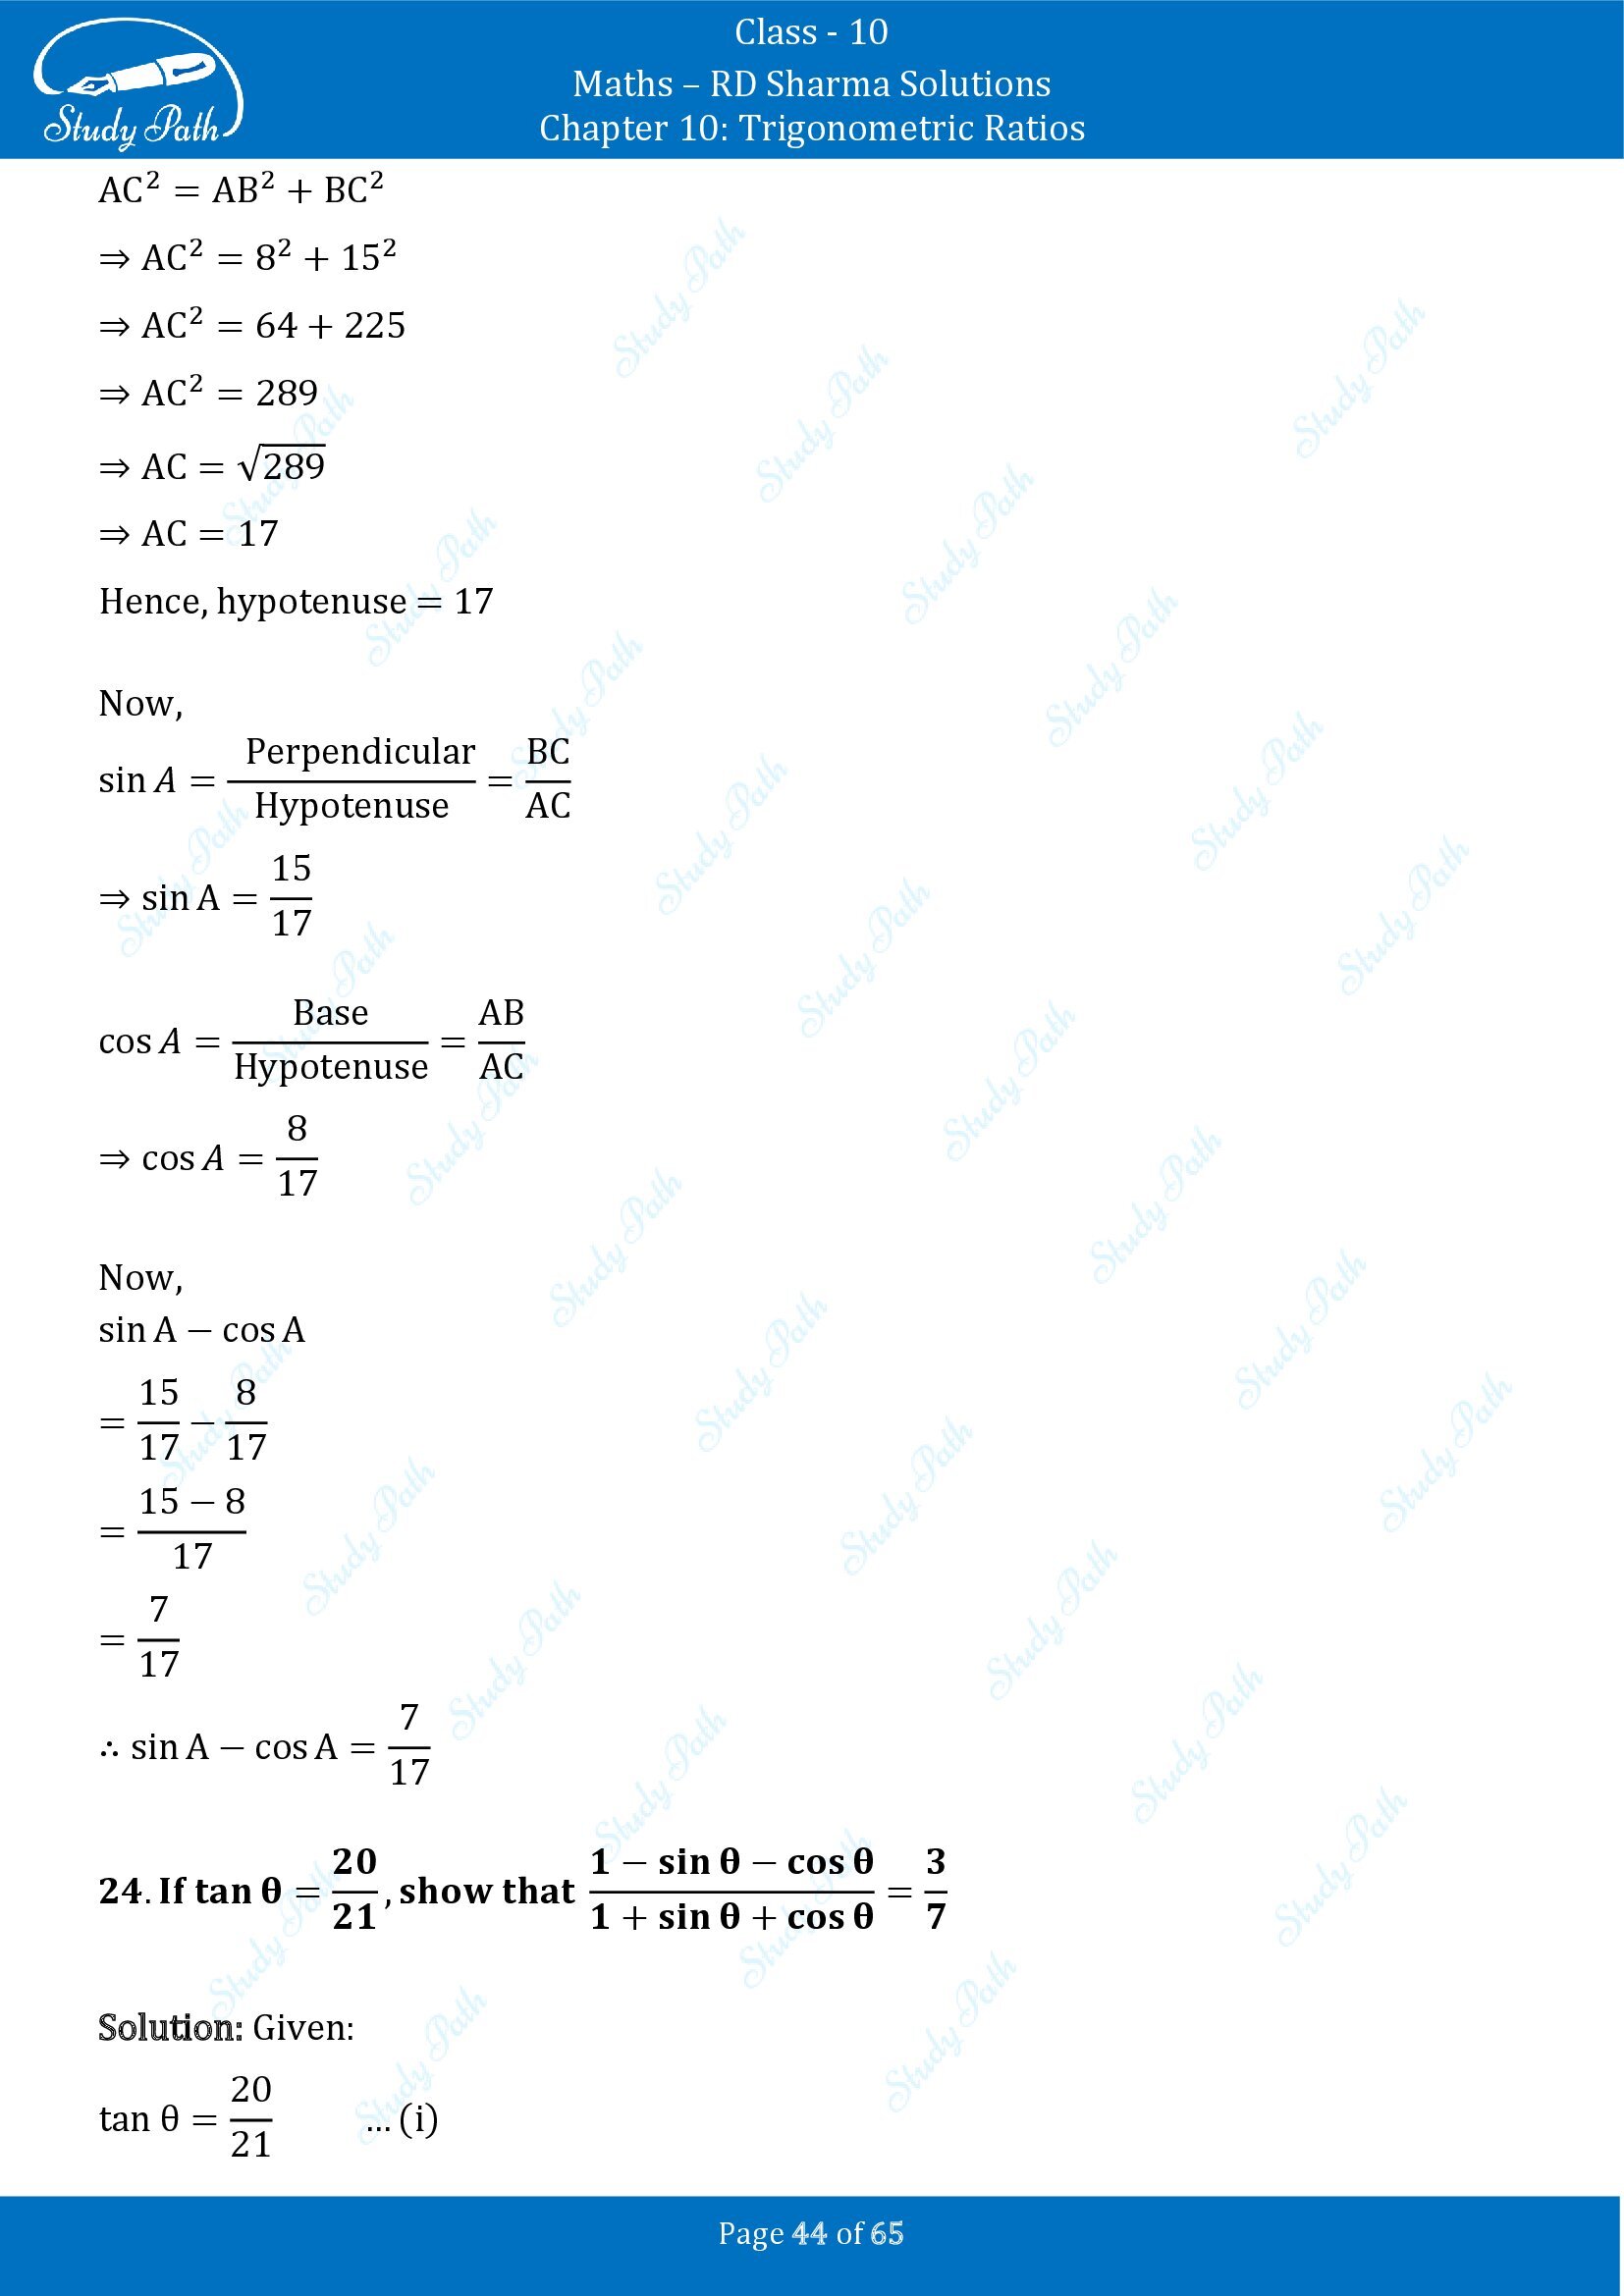 RD Sharma Solutions Class 10 Chapter 10 Trigonometric Ratios Exercise 10.1 00044